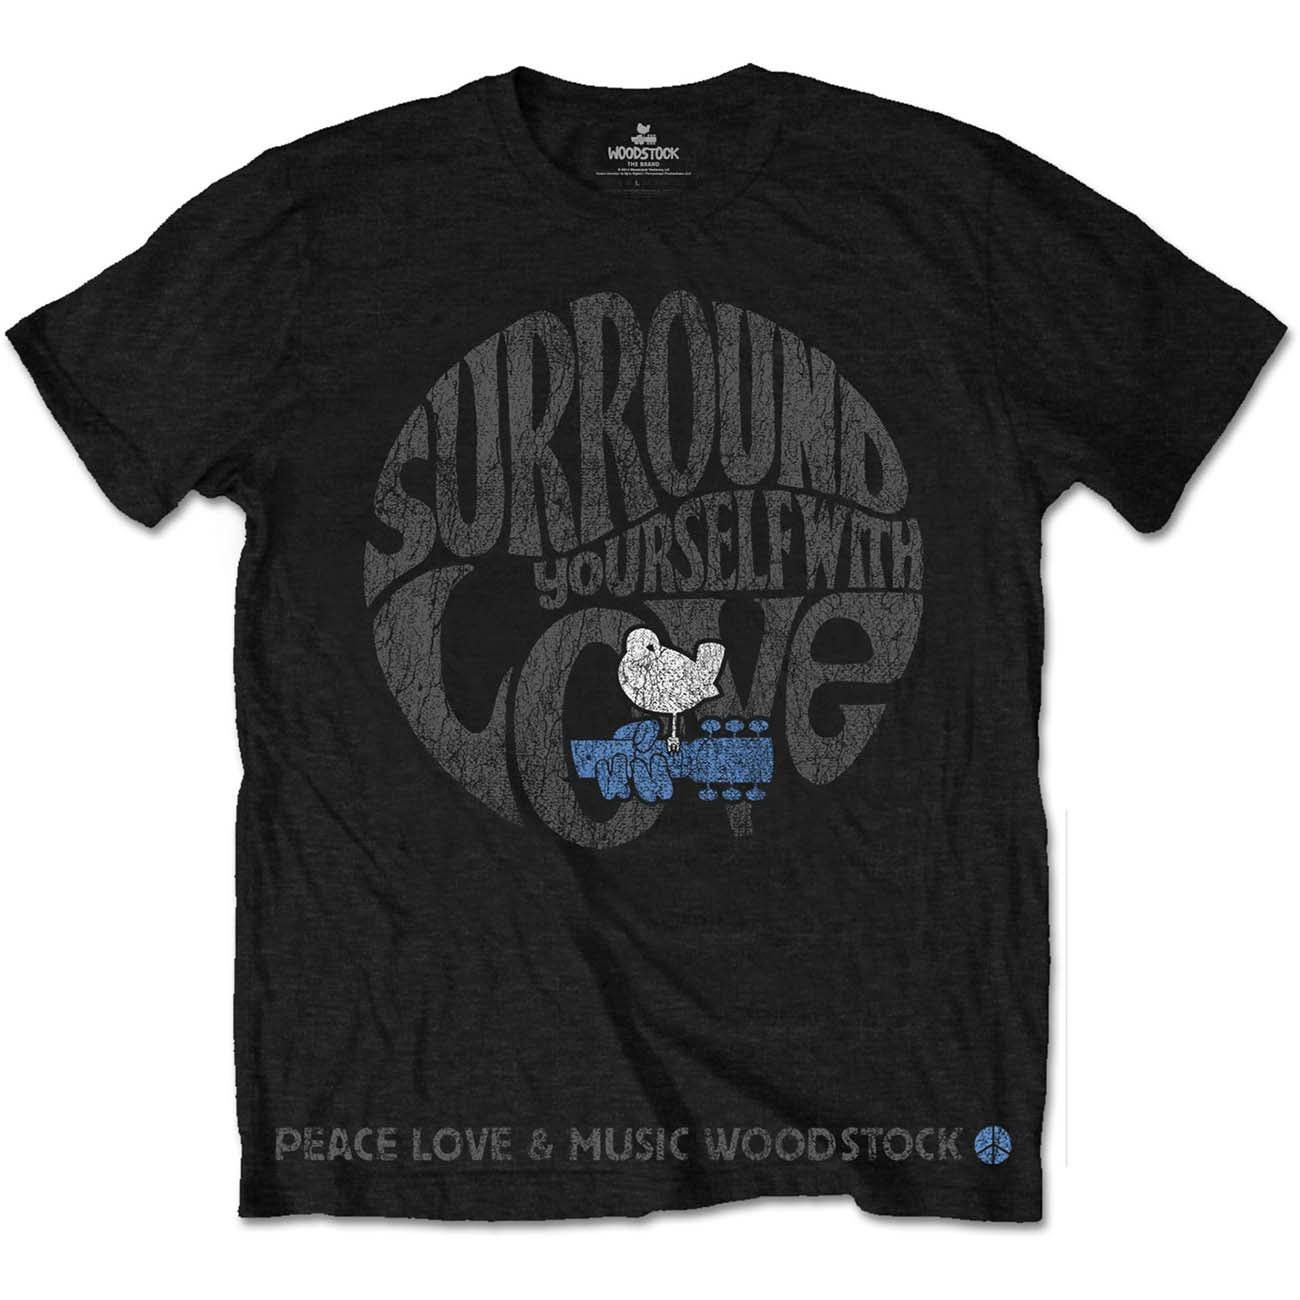 Woodstock Unisex T-Shirt: Surround Yourself